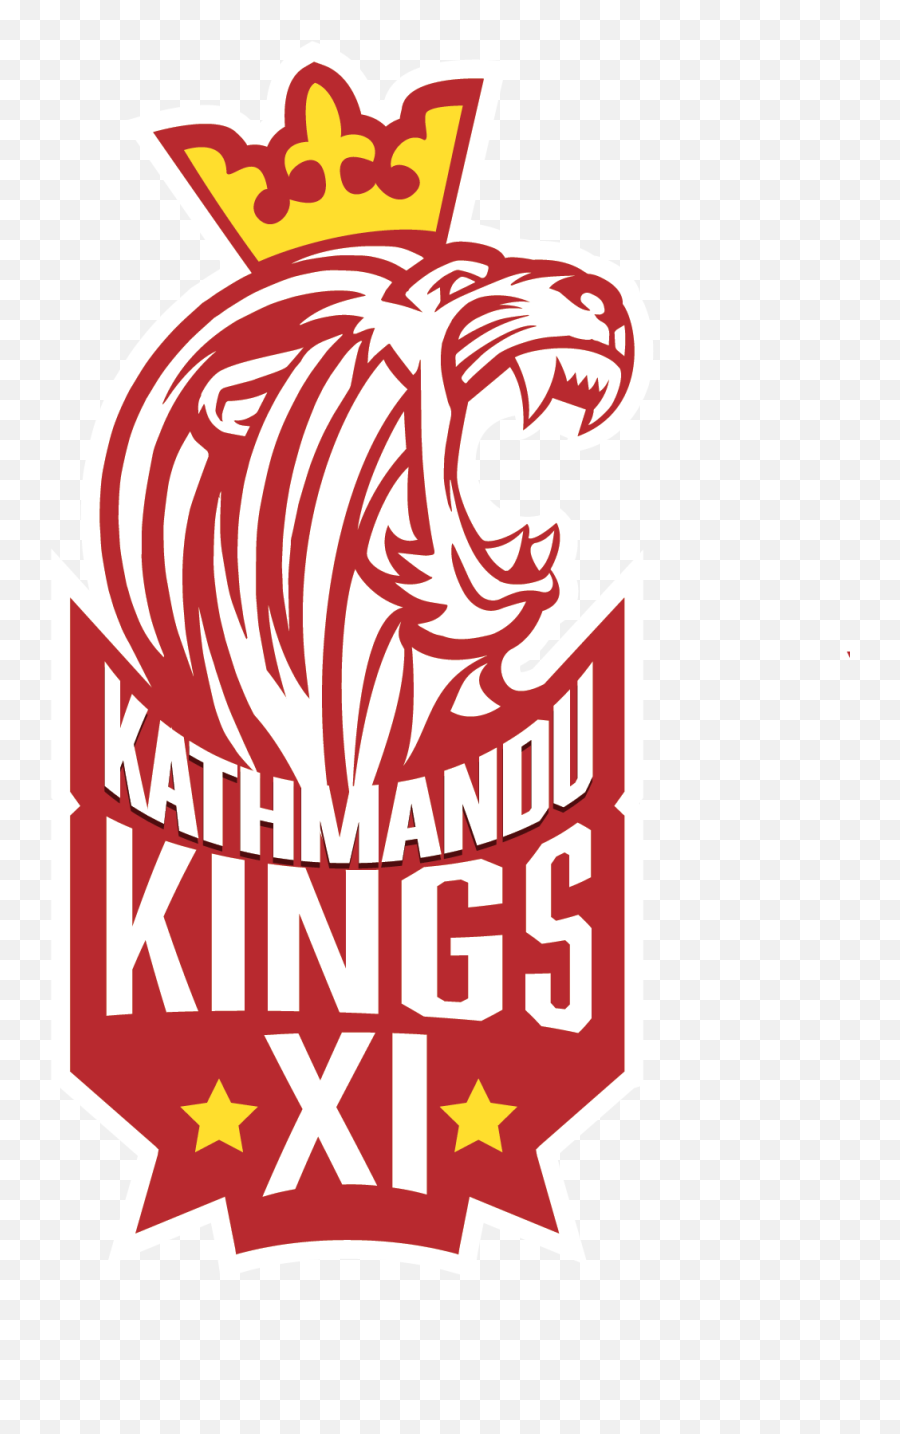 No Image Found - Kathmandu Kings Xi Clipart Full Size Emoji,Found Clipart